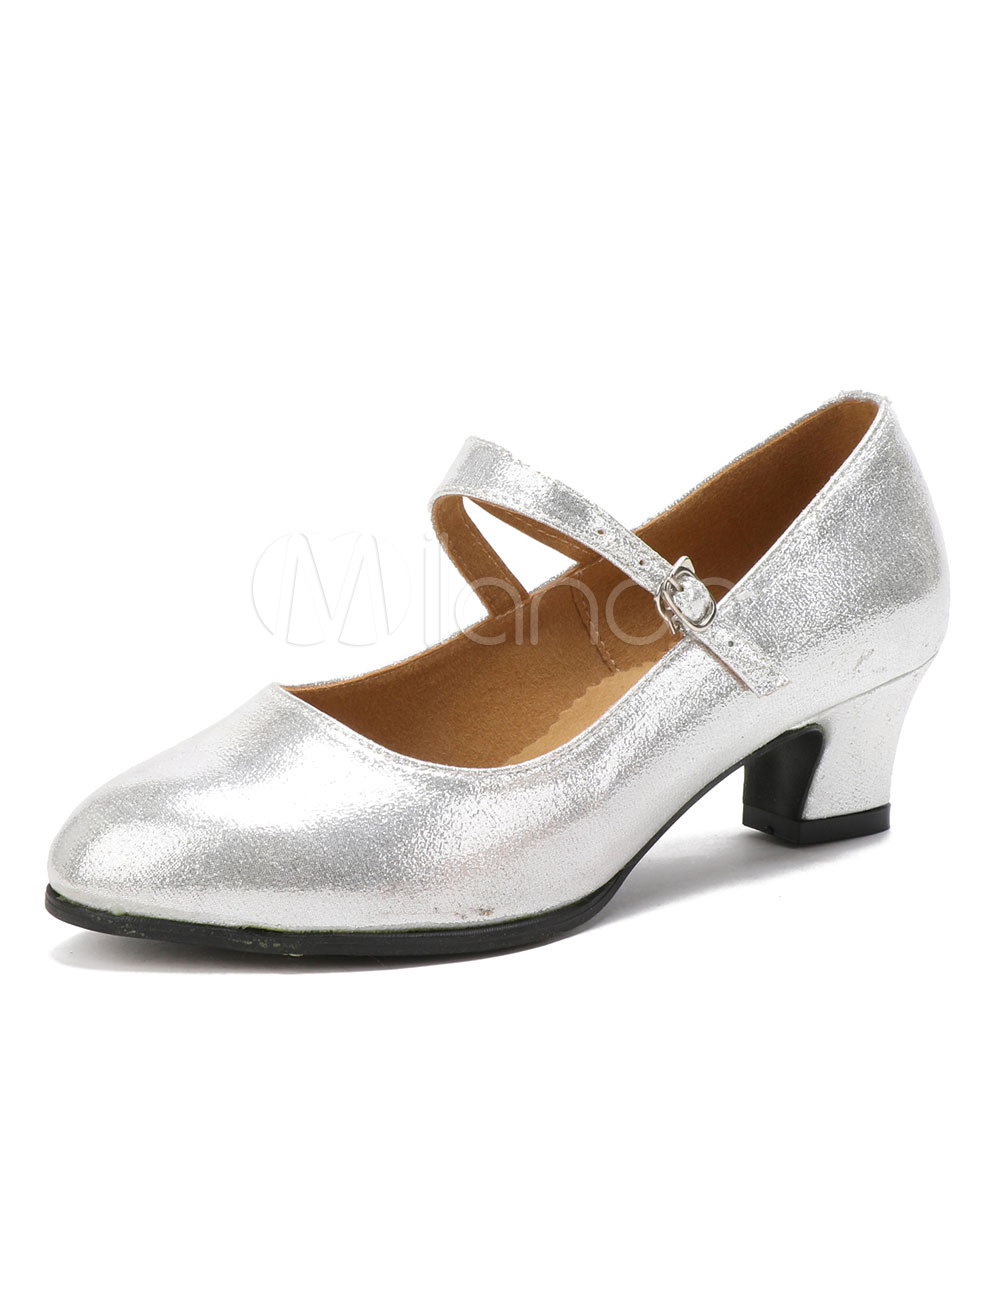 mary jane ballroom dance shoes